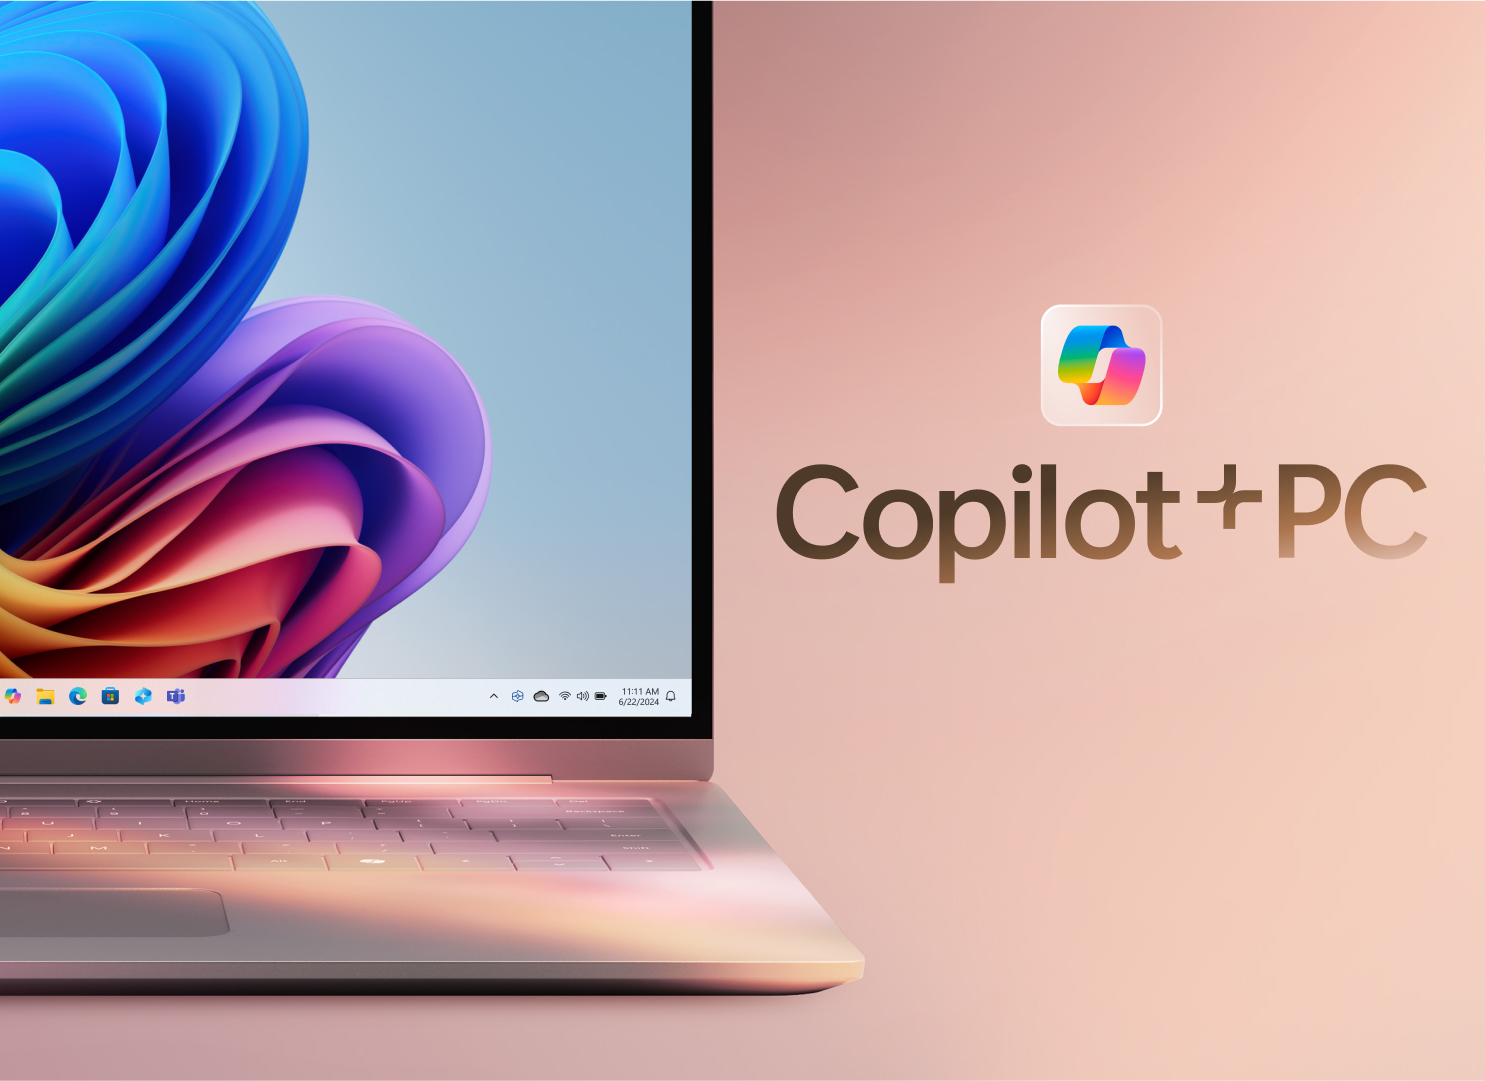 Laptop computer along with Copilot logo and text reading Copilot+ PC